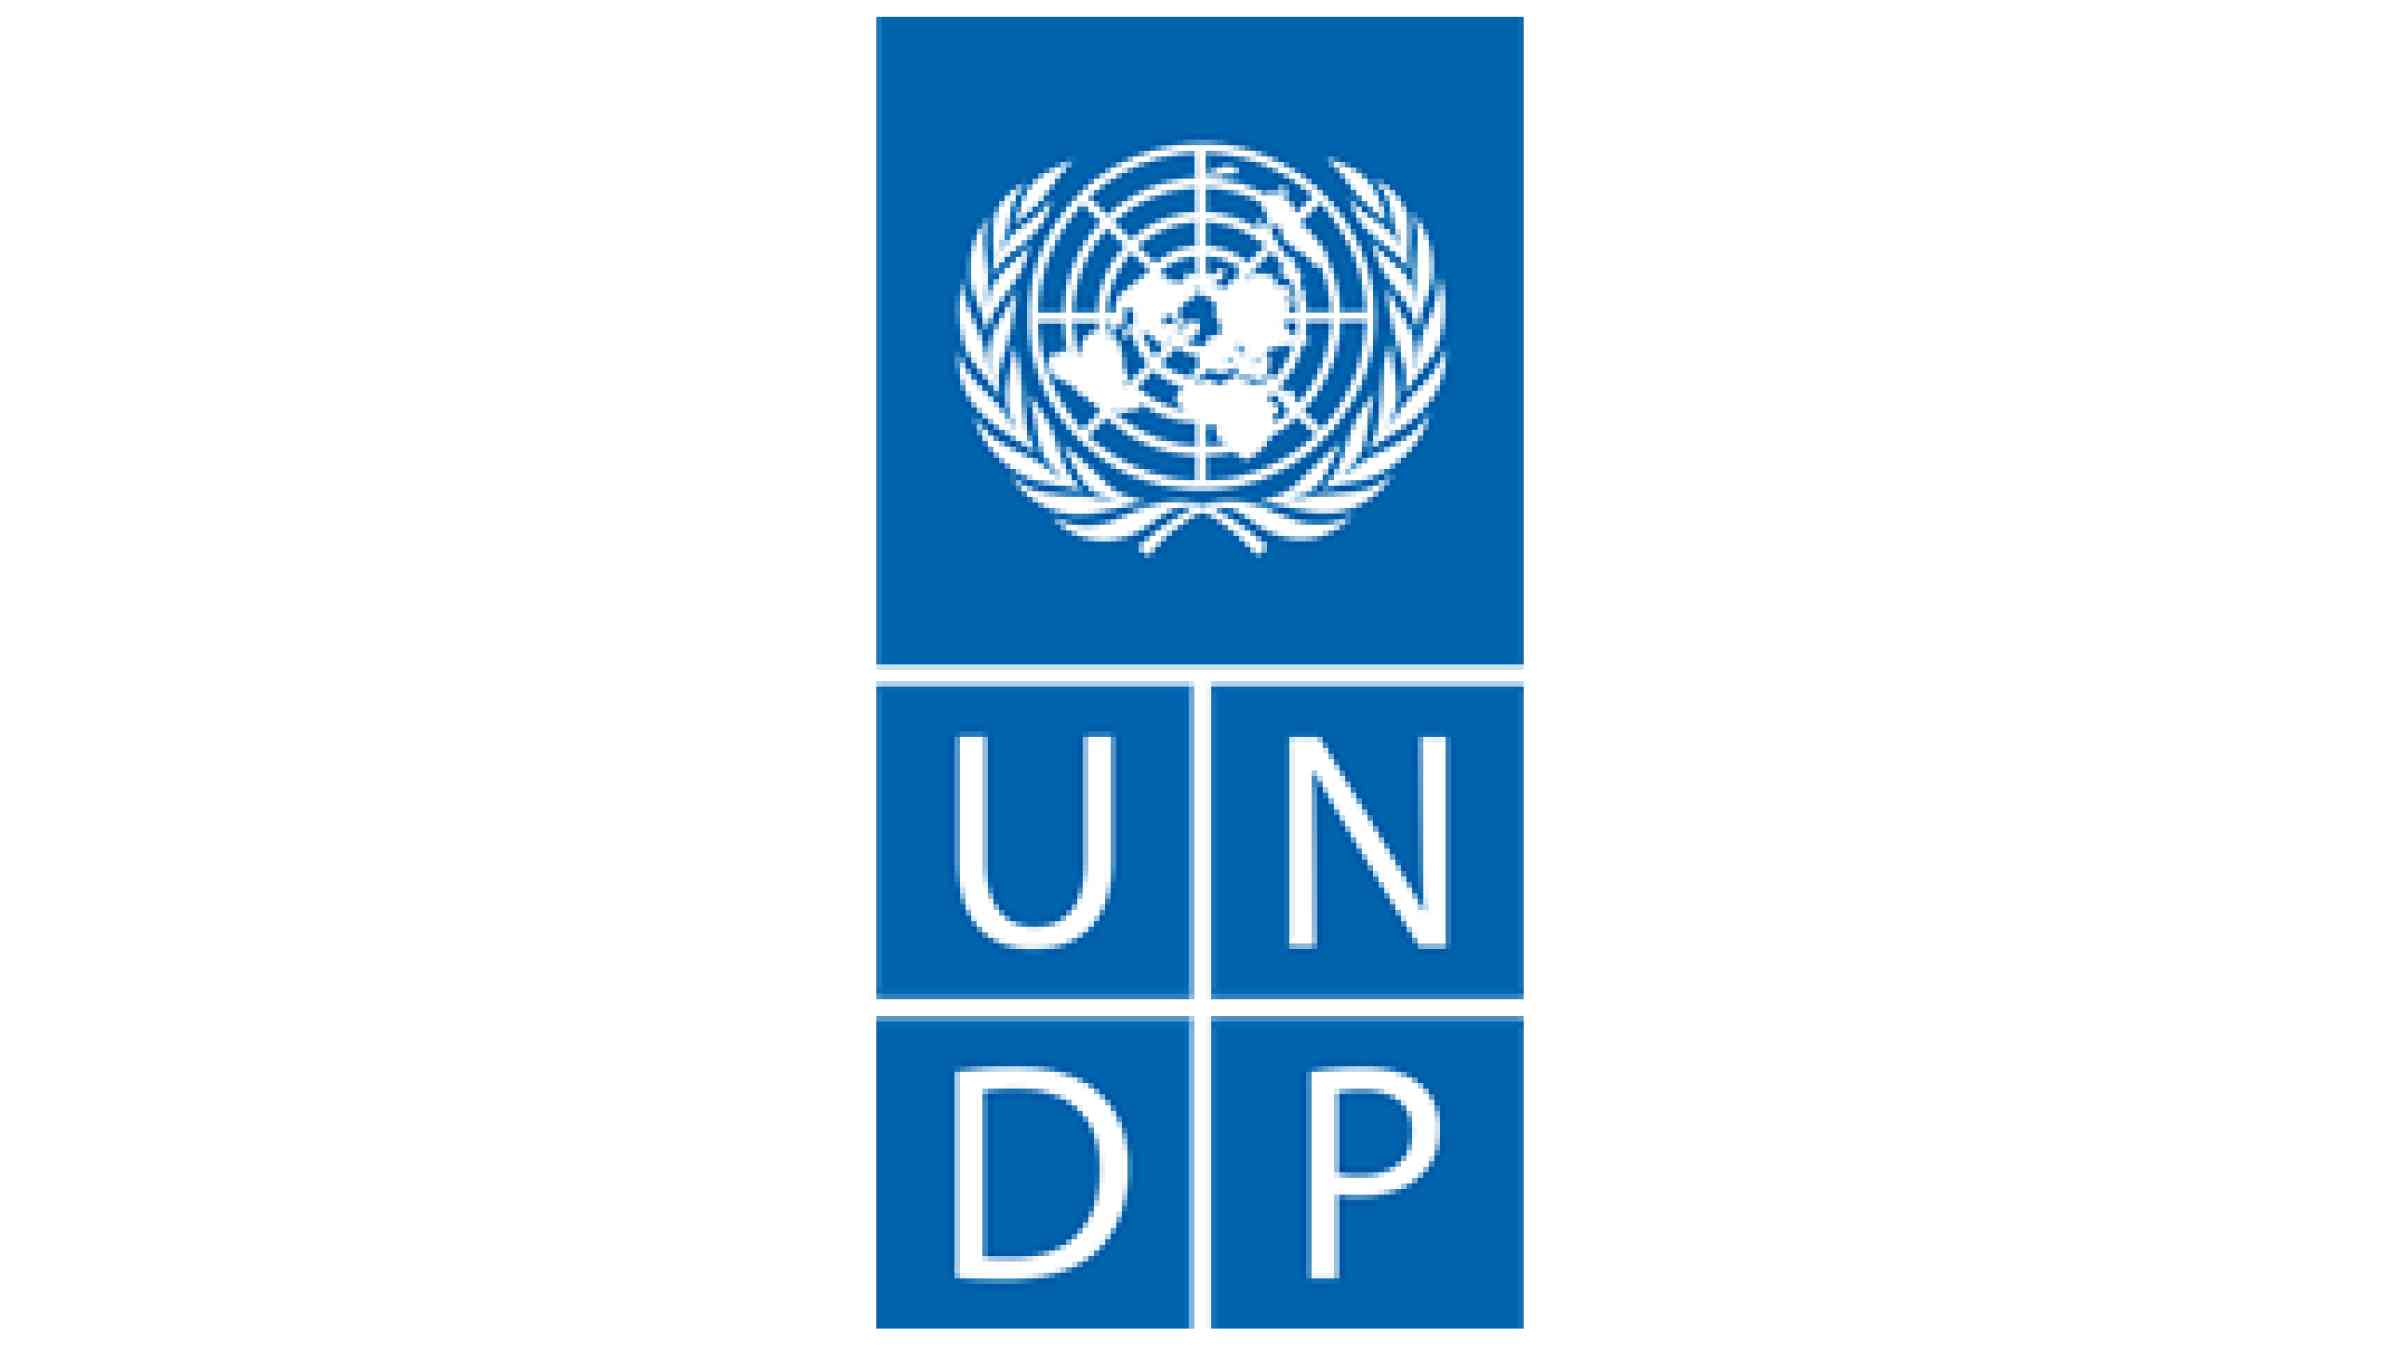 MCR2030 partner logo - UNDP